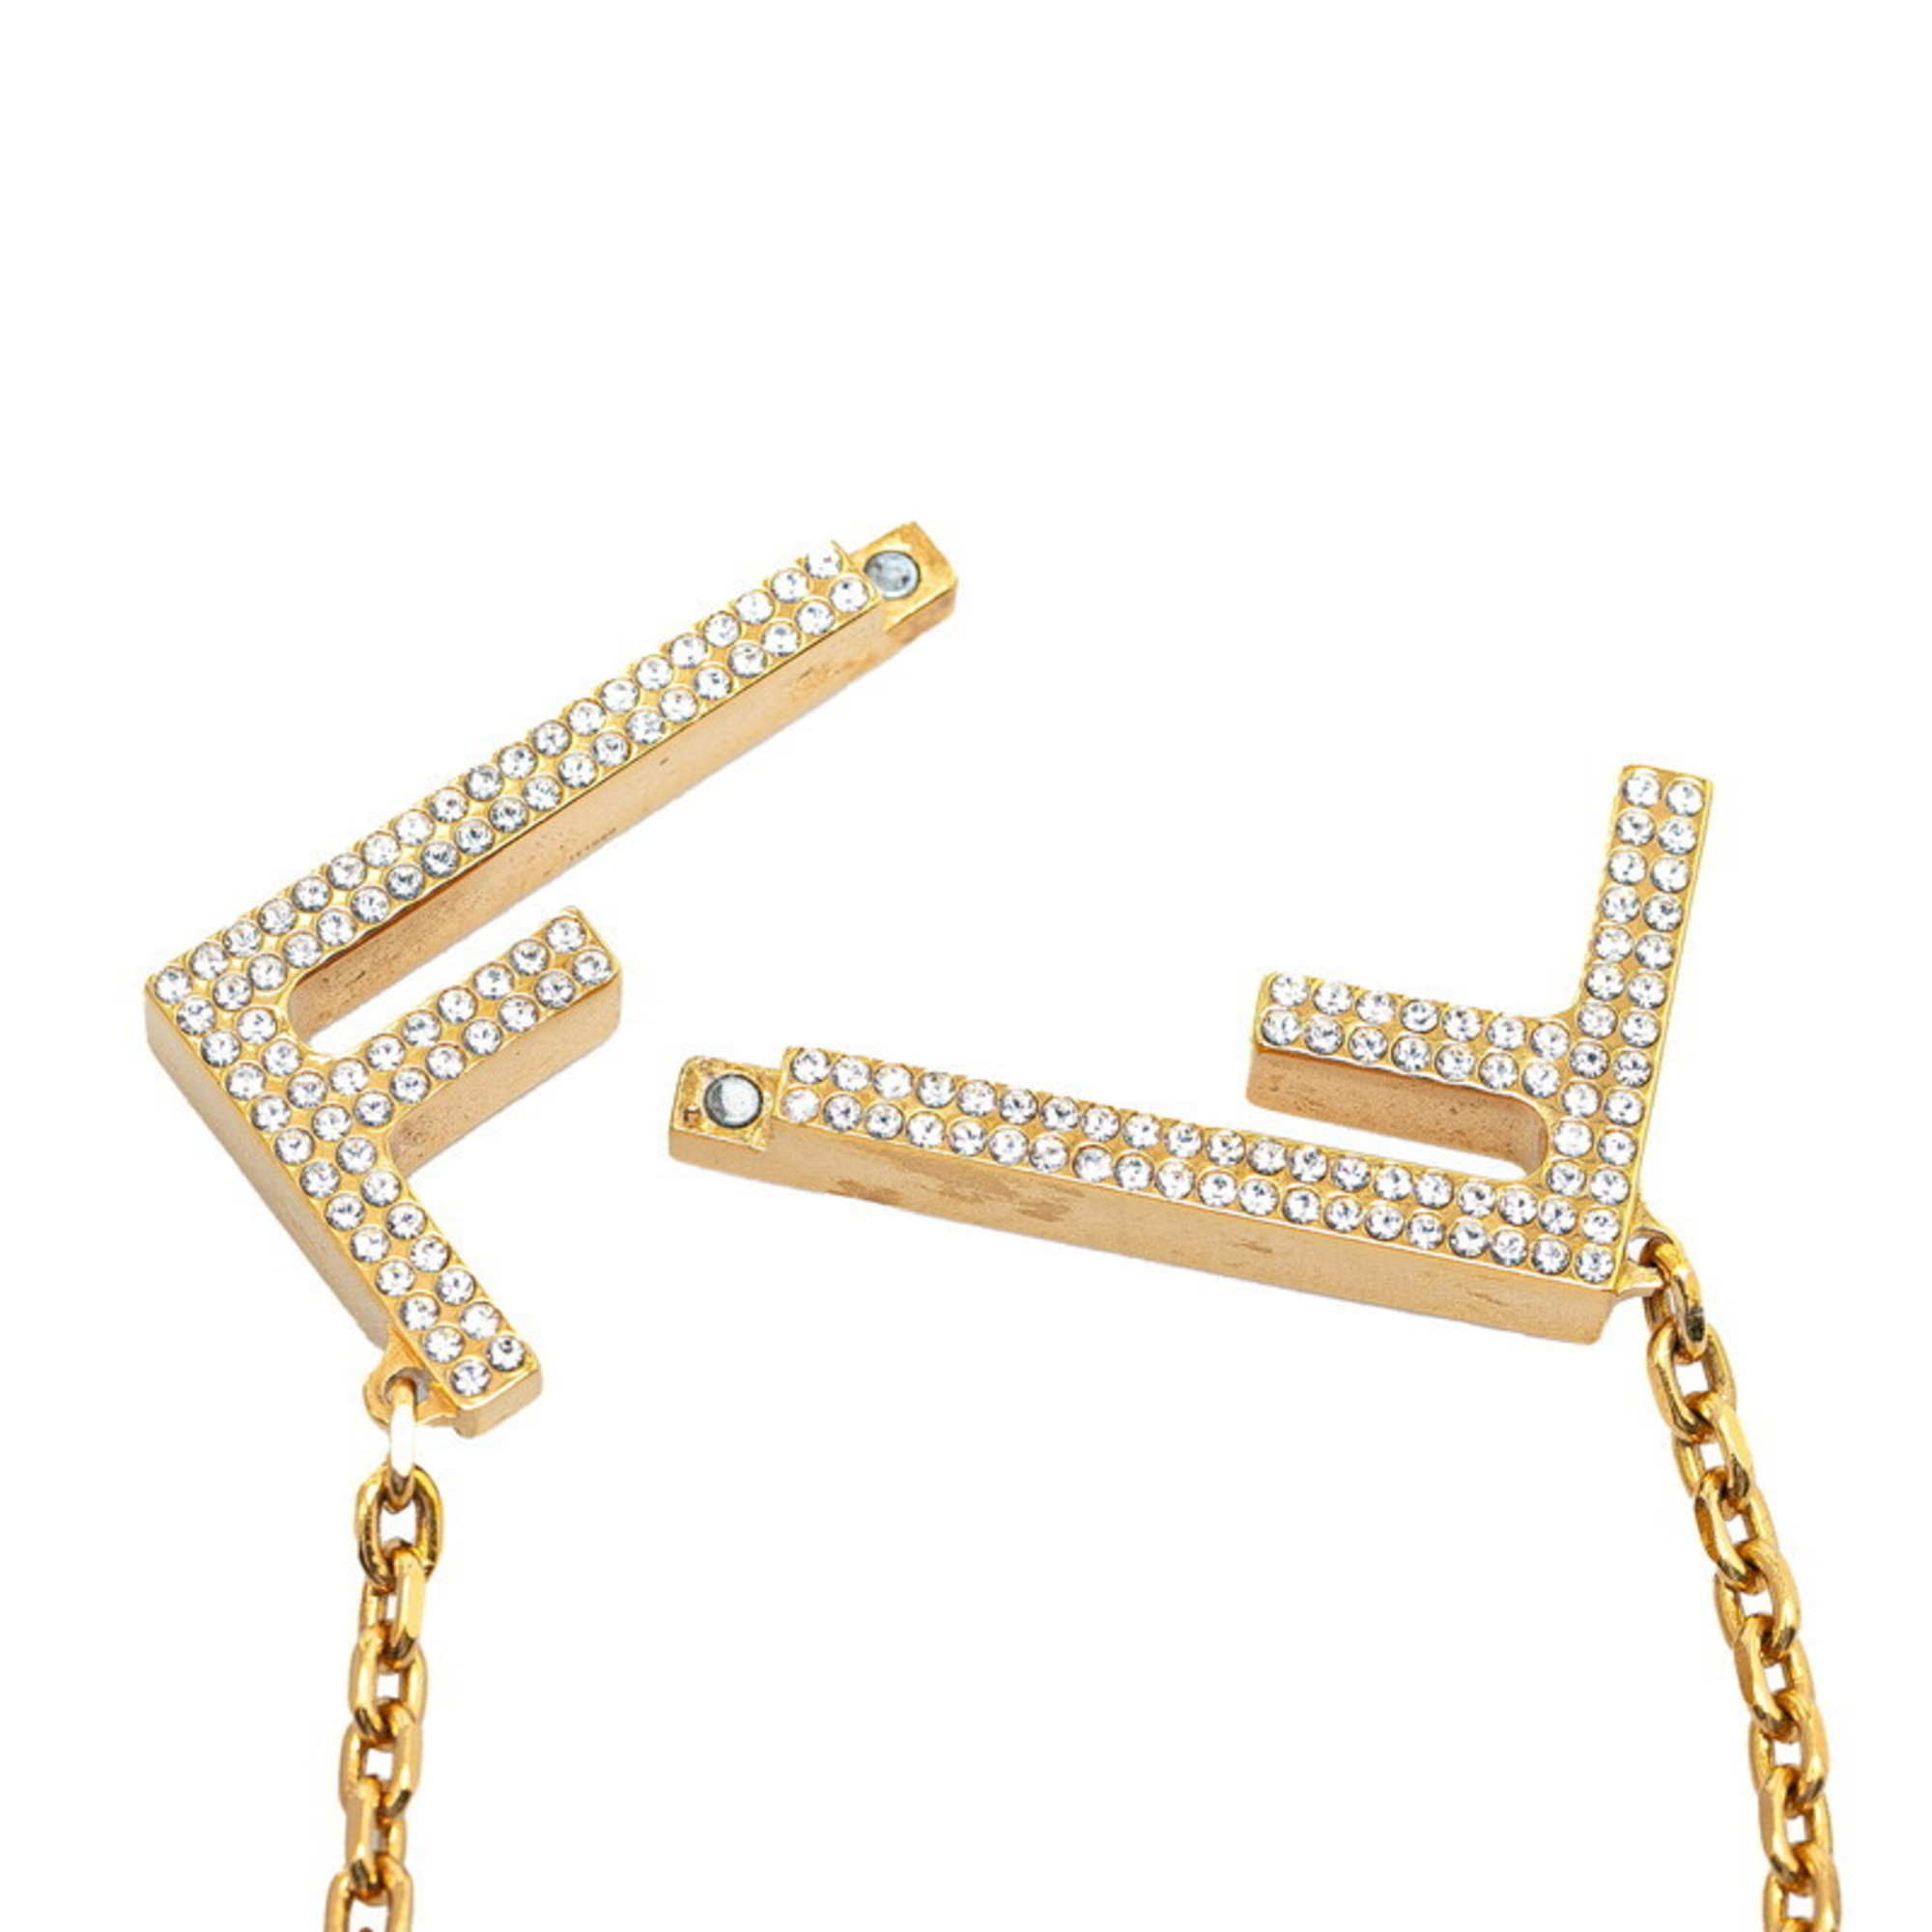 FENDI FF motif rhinestone chain necklace in gold metal for women